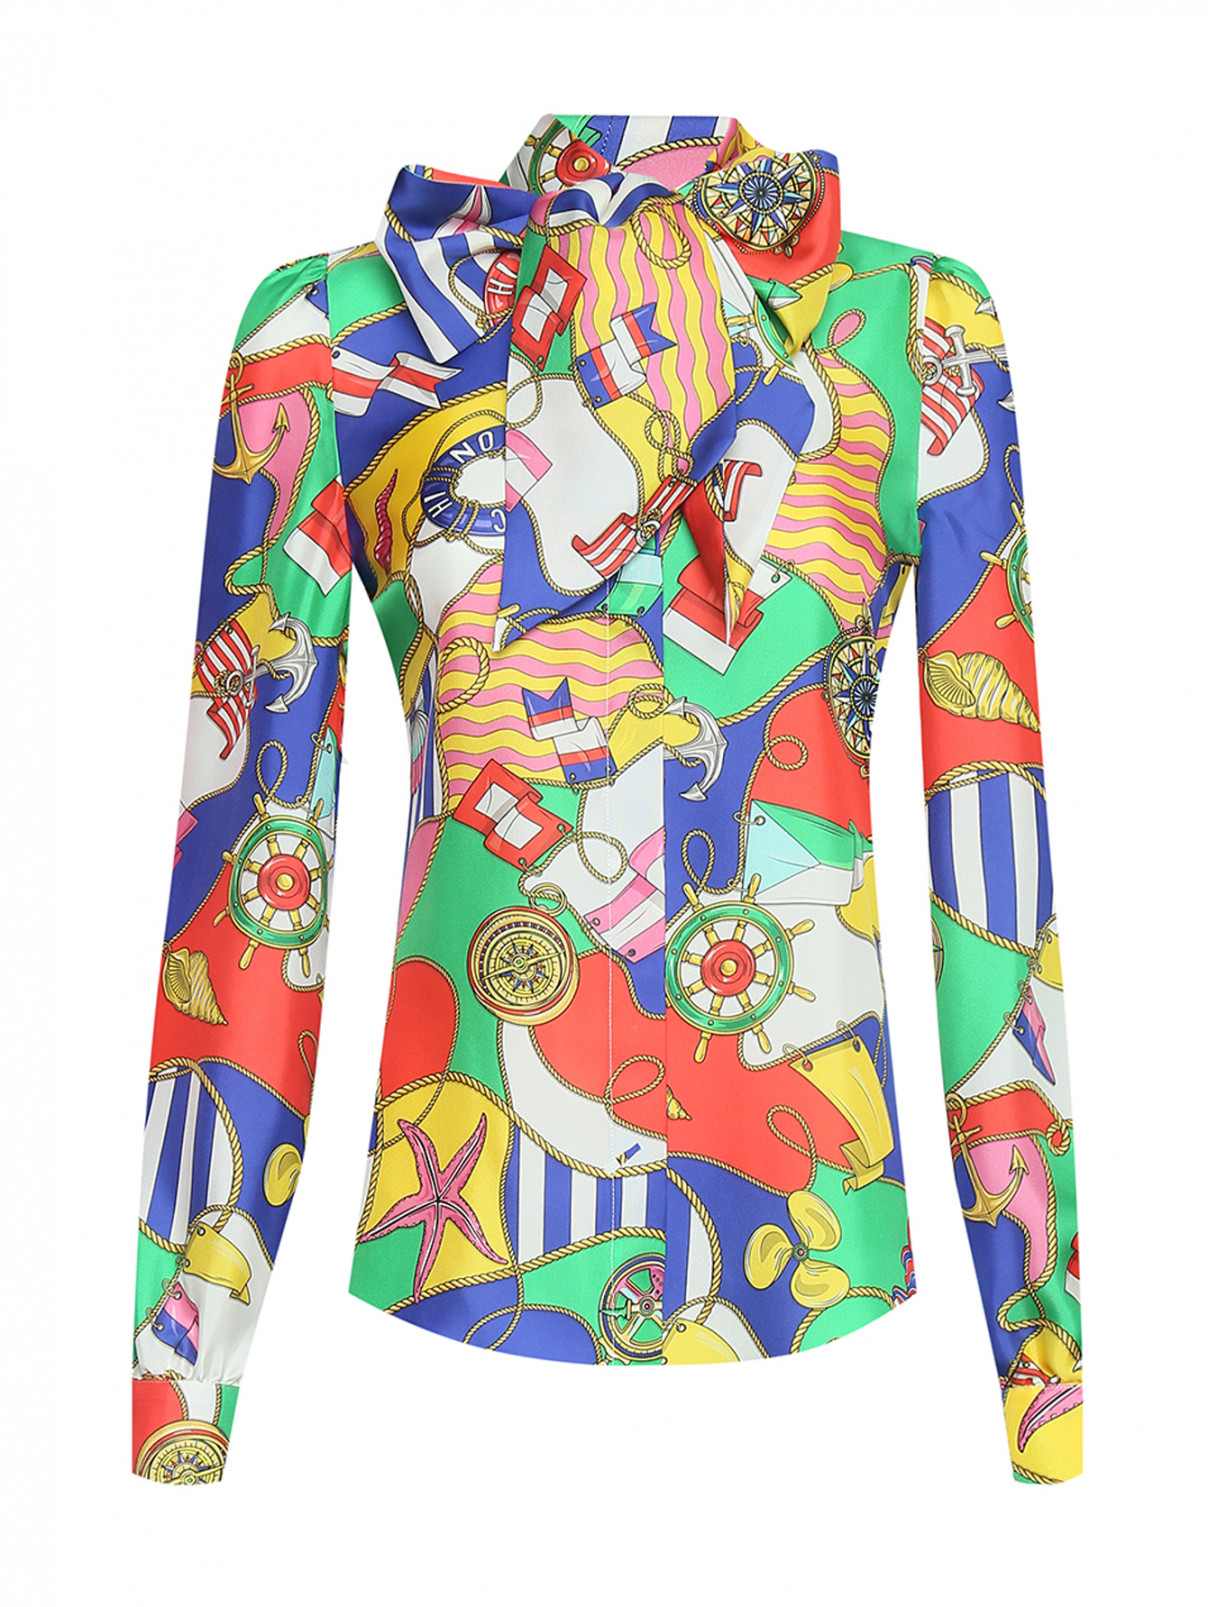 Блуза из шелка с узором Moschino  –  Общий вид  – Цвет:  Узор